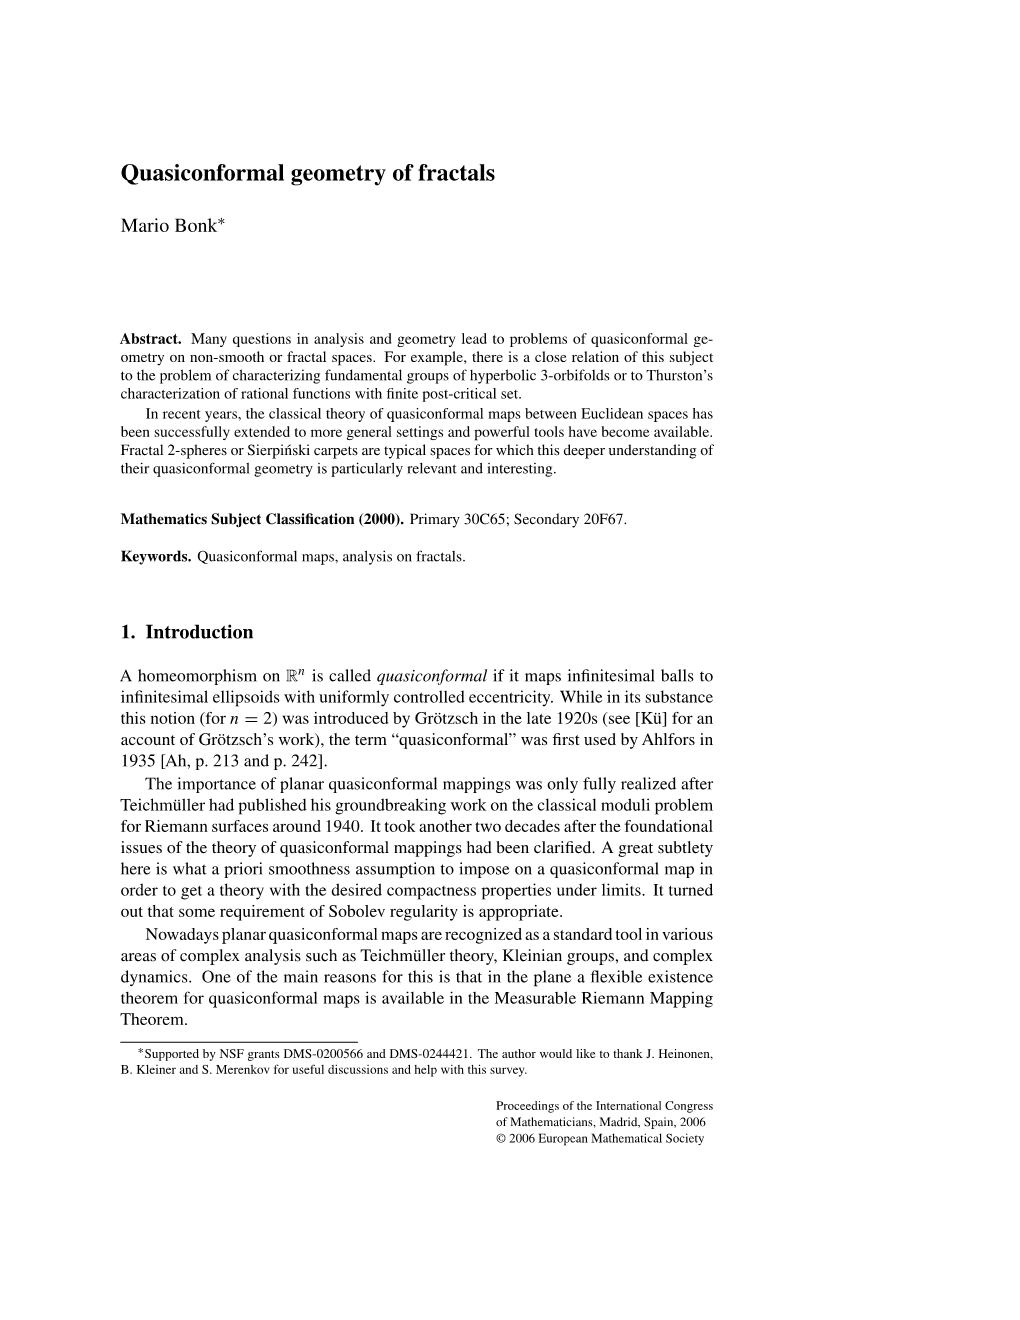 Quasiconformal Geometry of Fractals